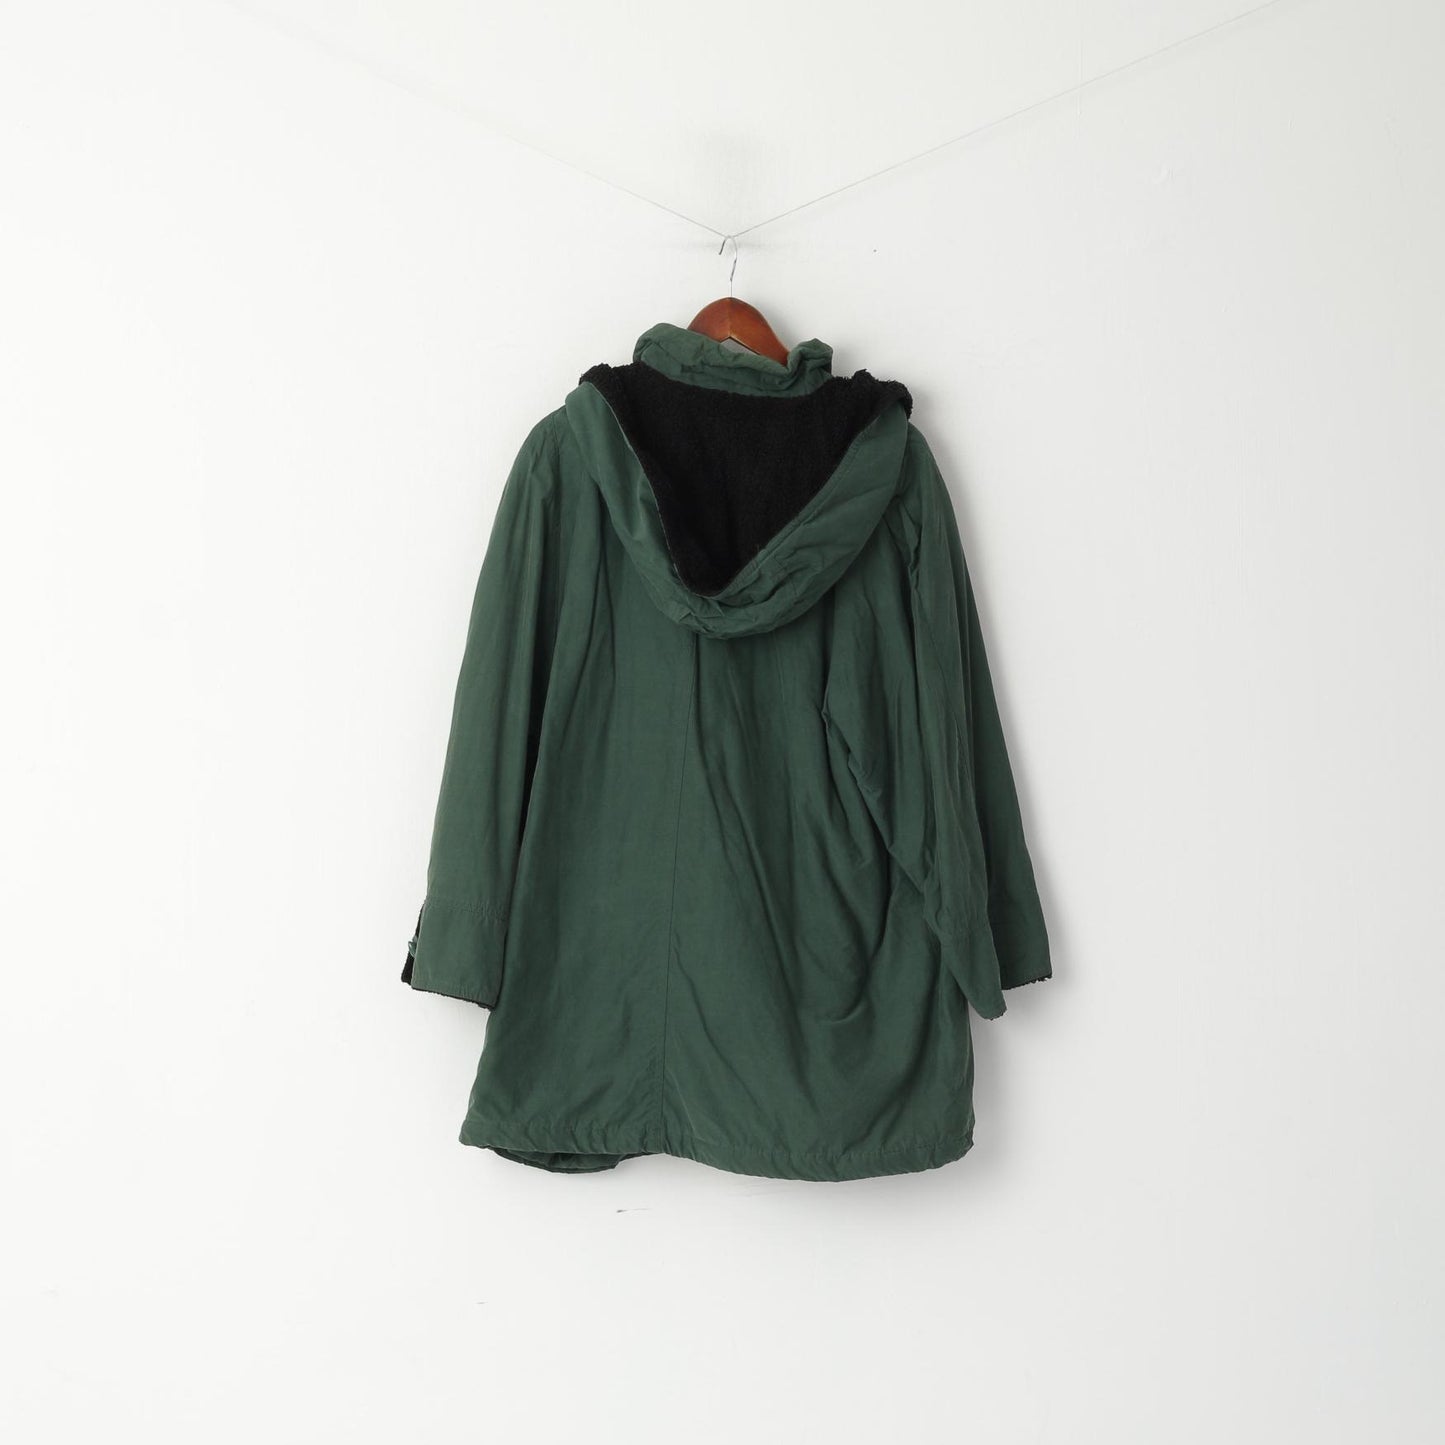 Vintage Women 18 44 XXL Coat Green Wool Cotton Hooded Oversize Jacket